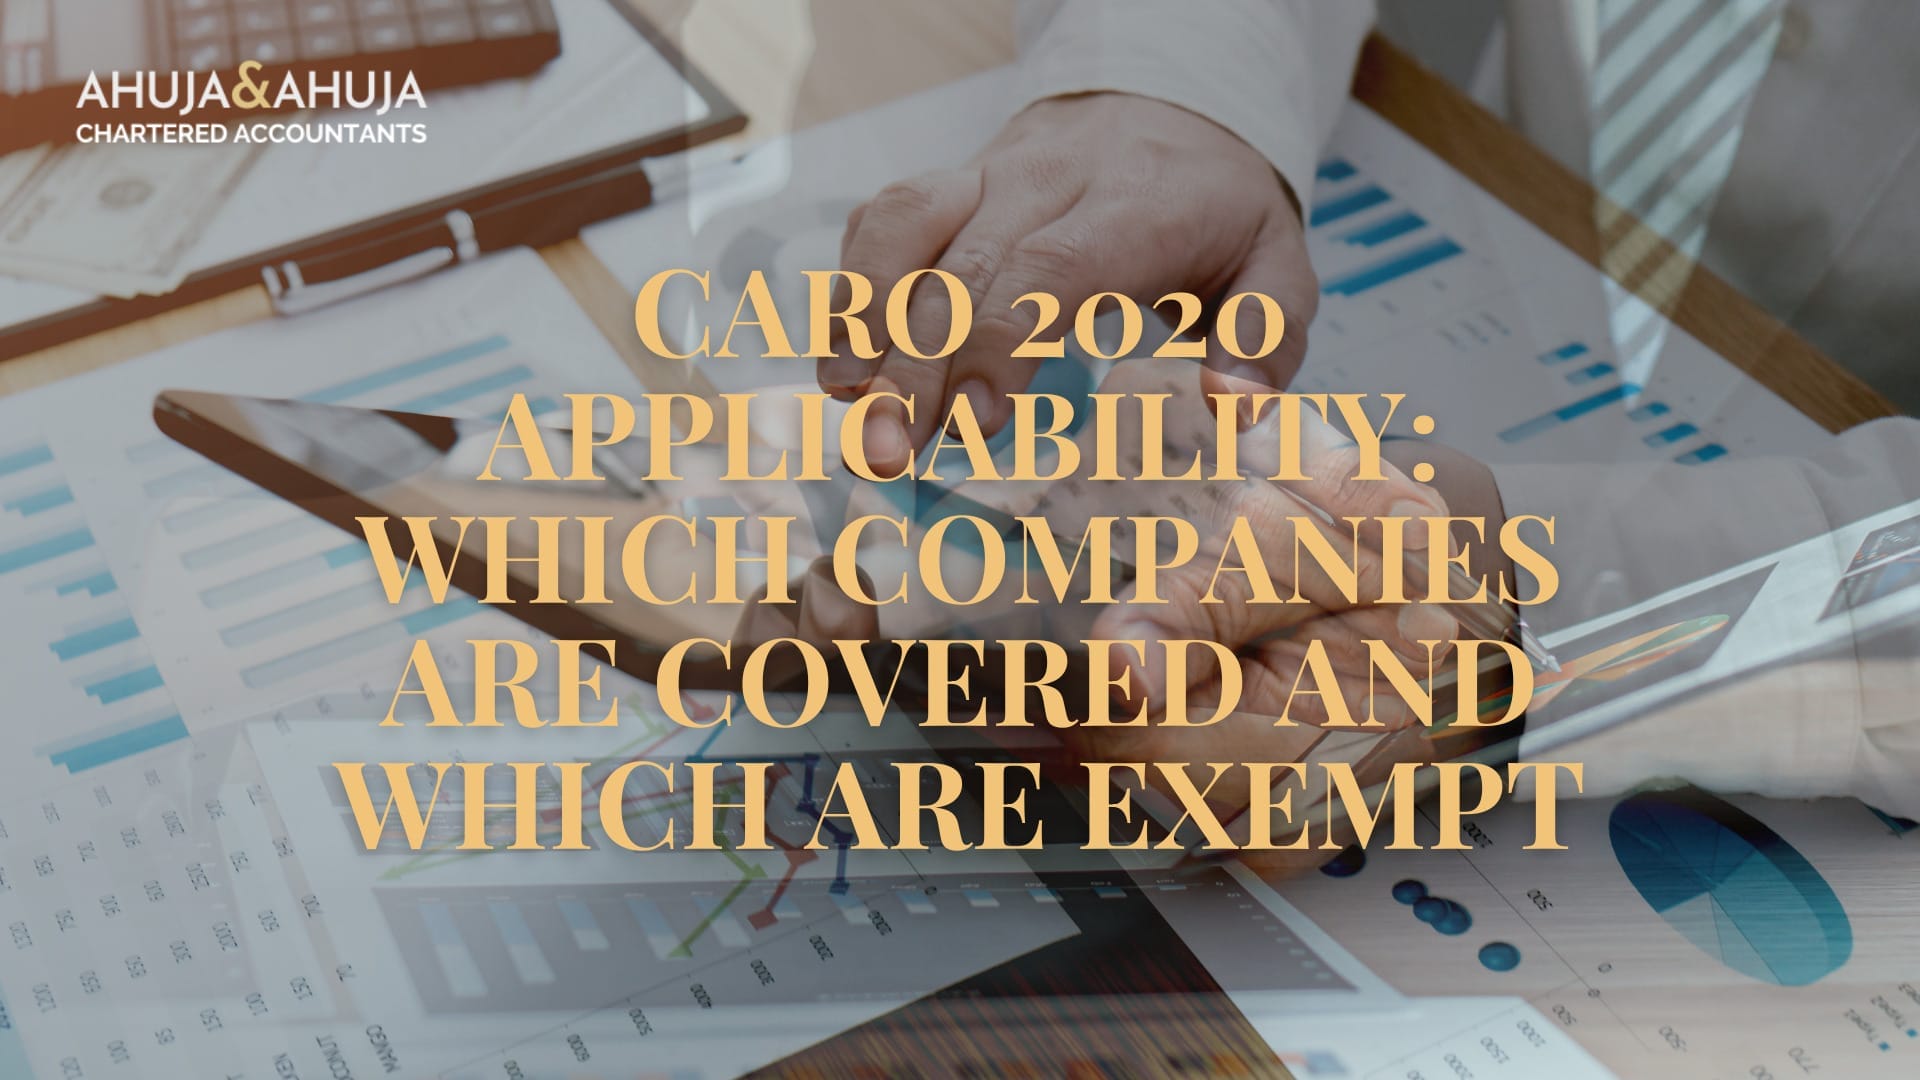 CARO 2020 Applicability